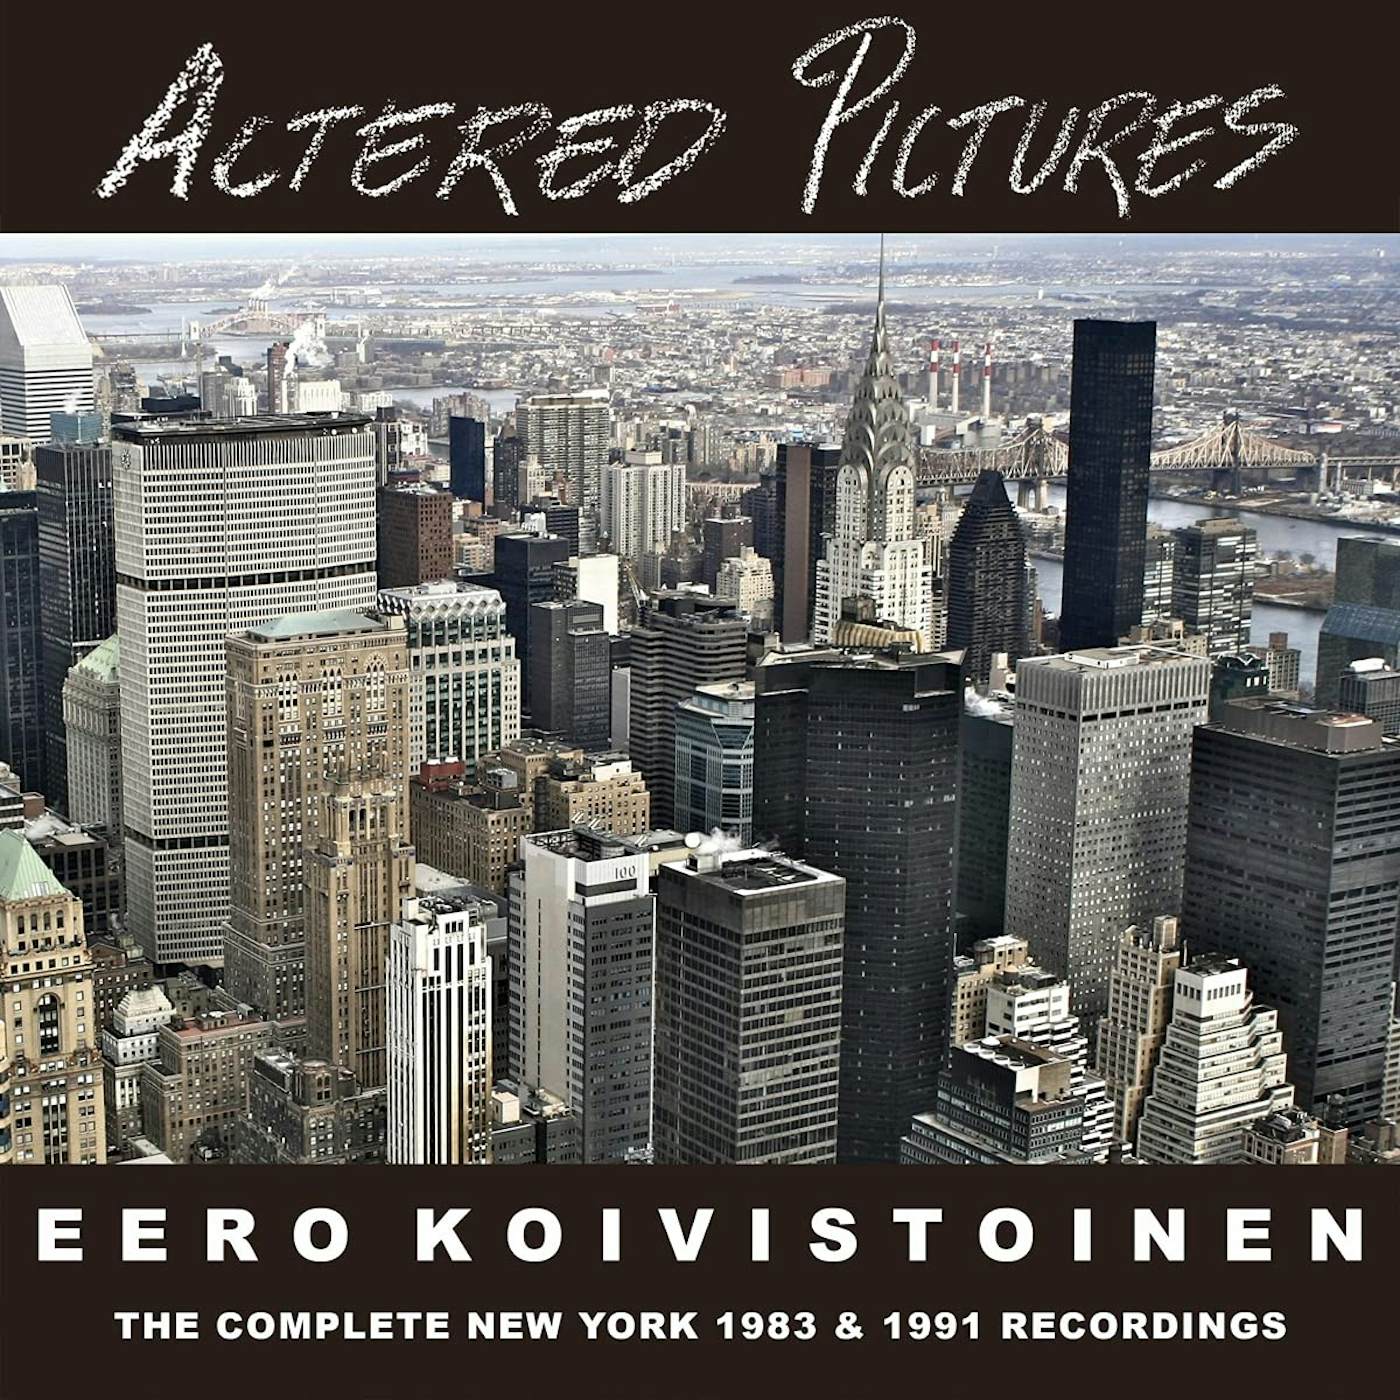 Eero Koivistoinen Altered Pictures   The Complete New York CD